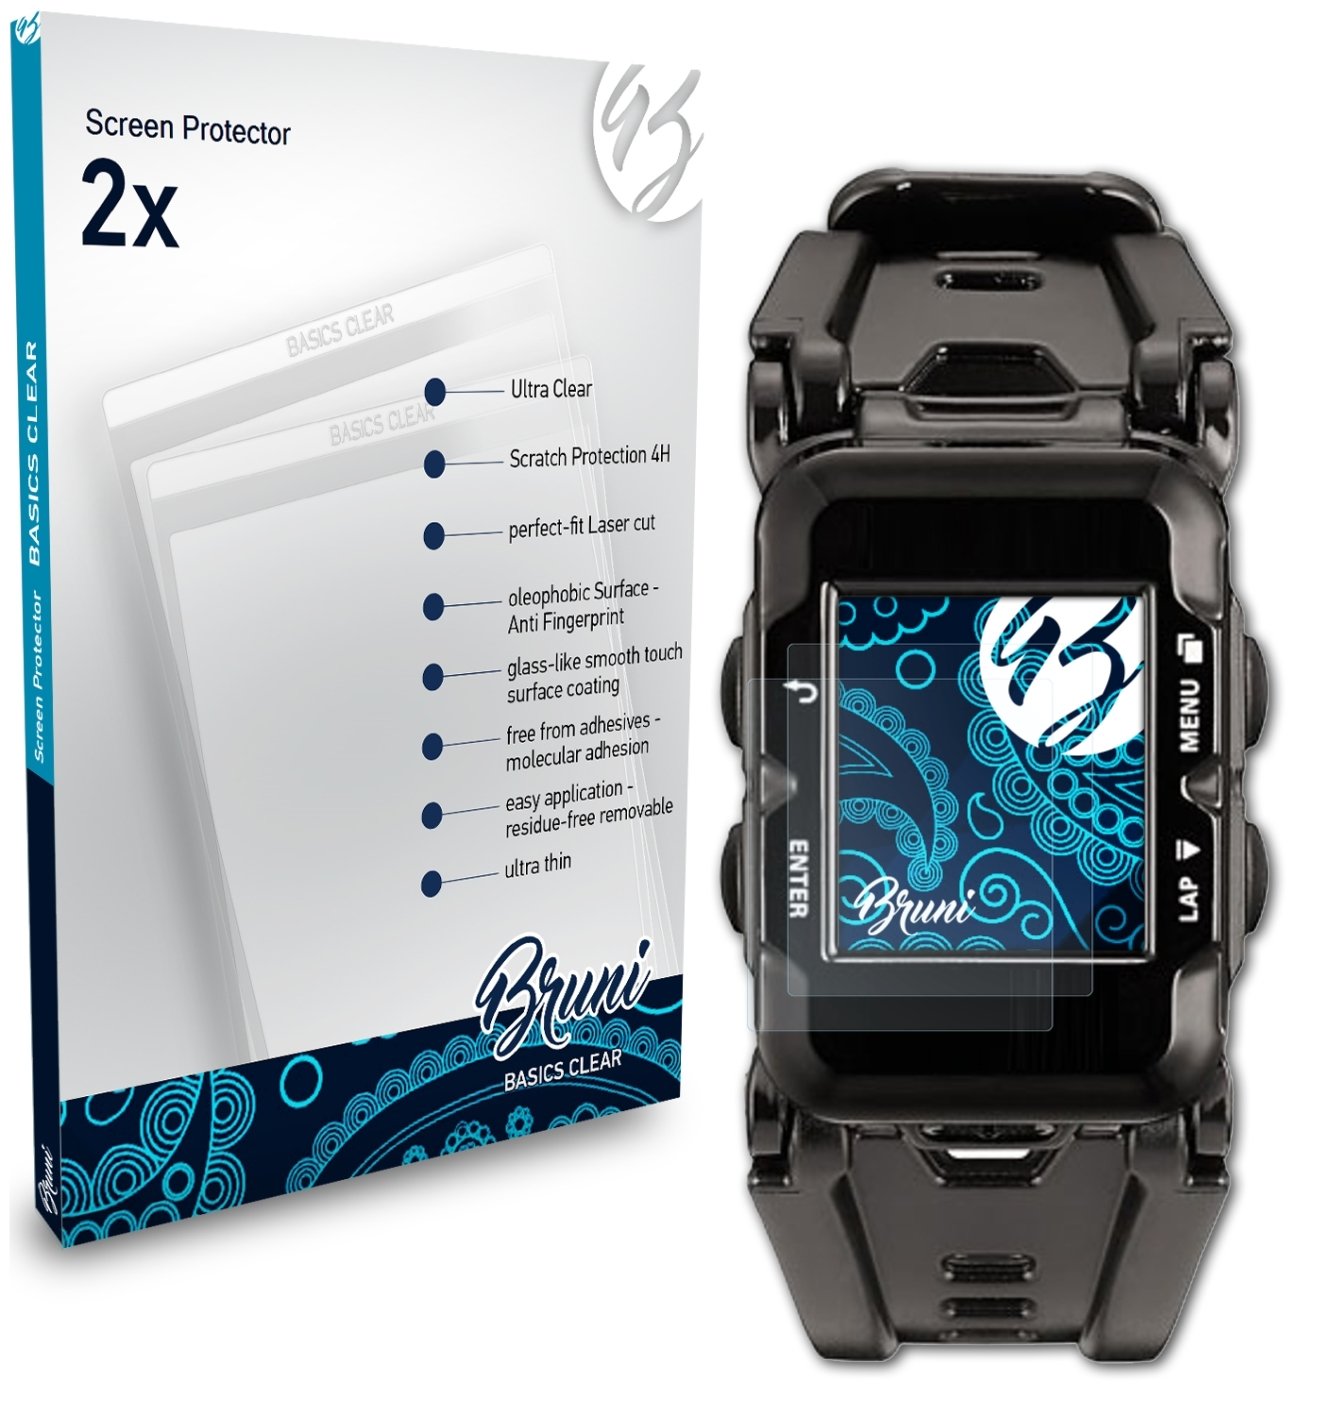 Lezyne C Micro Watch) BRUNI GPS Basics-Clear Schutzfolie(für 2x